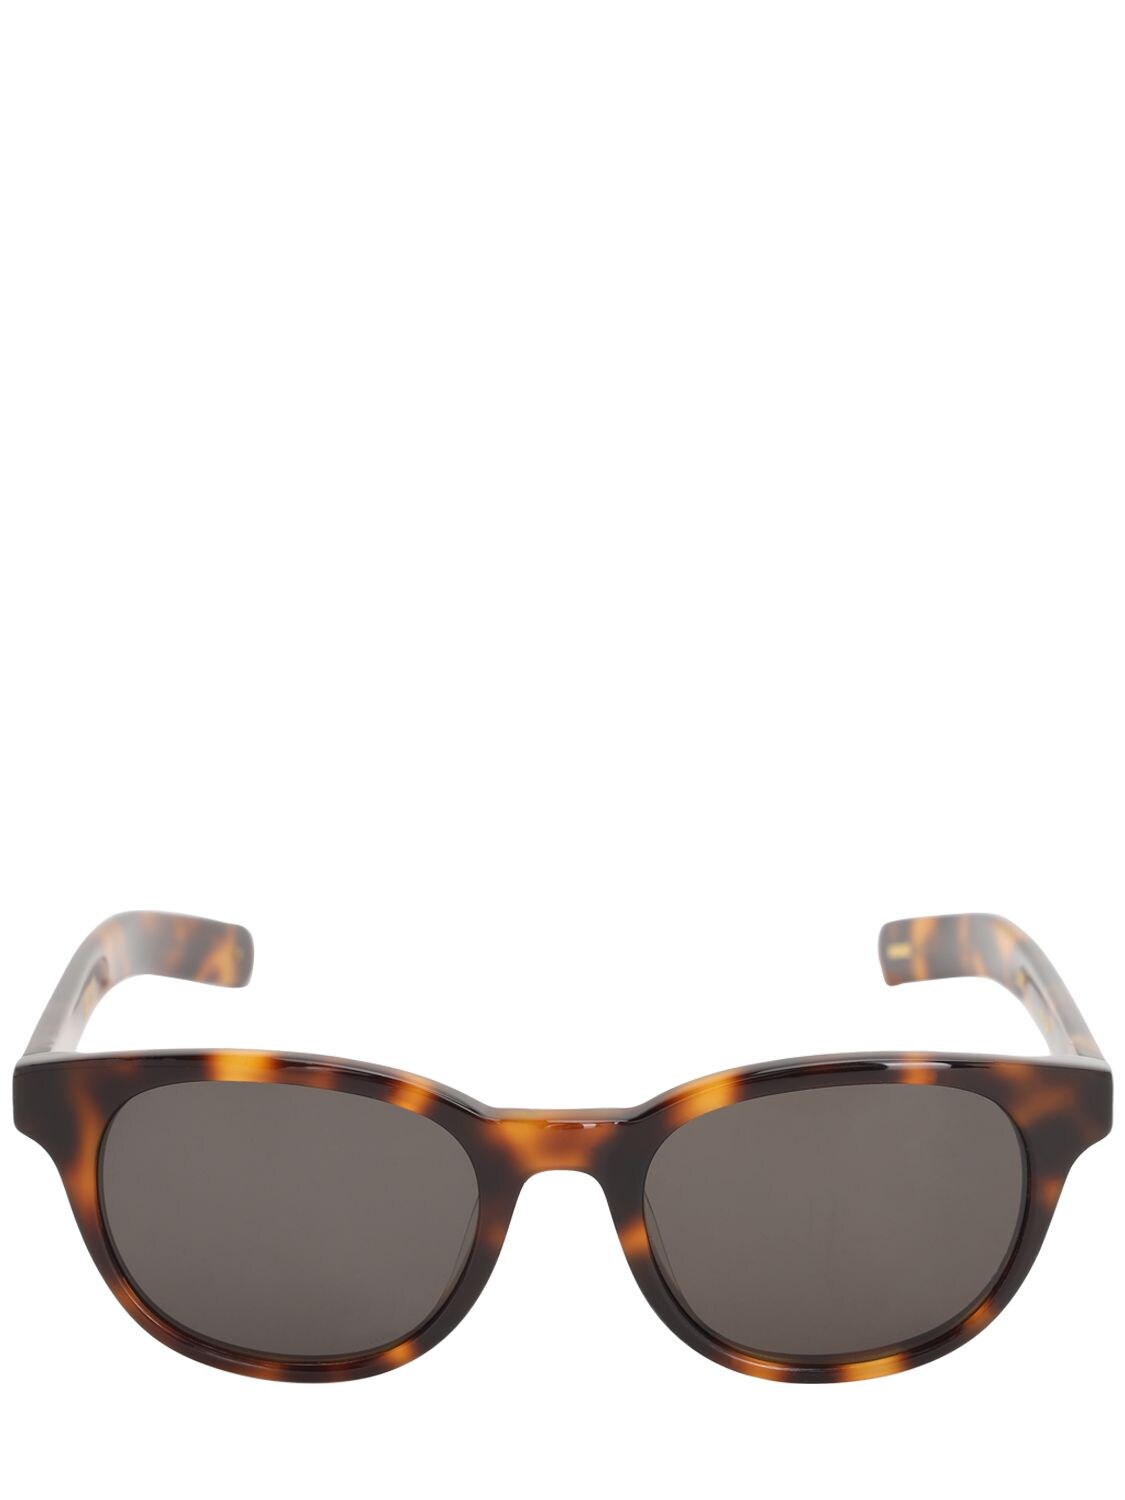 Flatlist Eyewear Logic Round Acetate Sunglasses In Tortoise,black